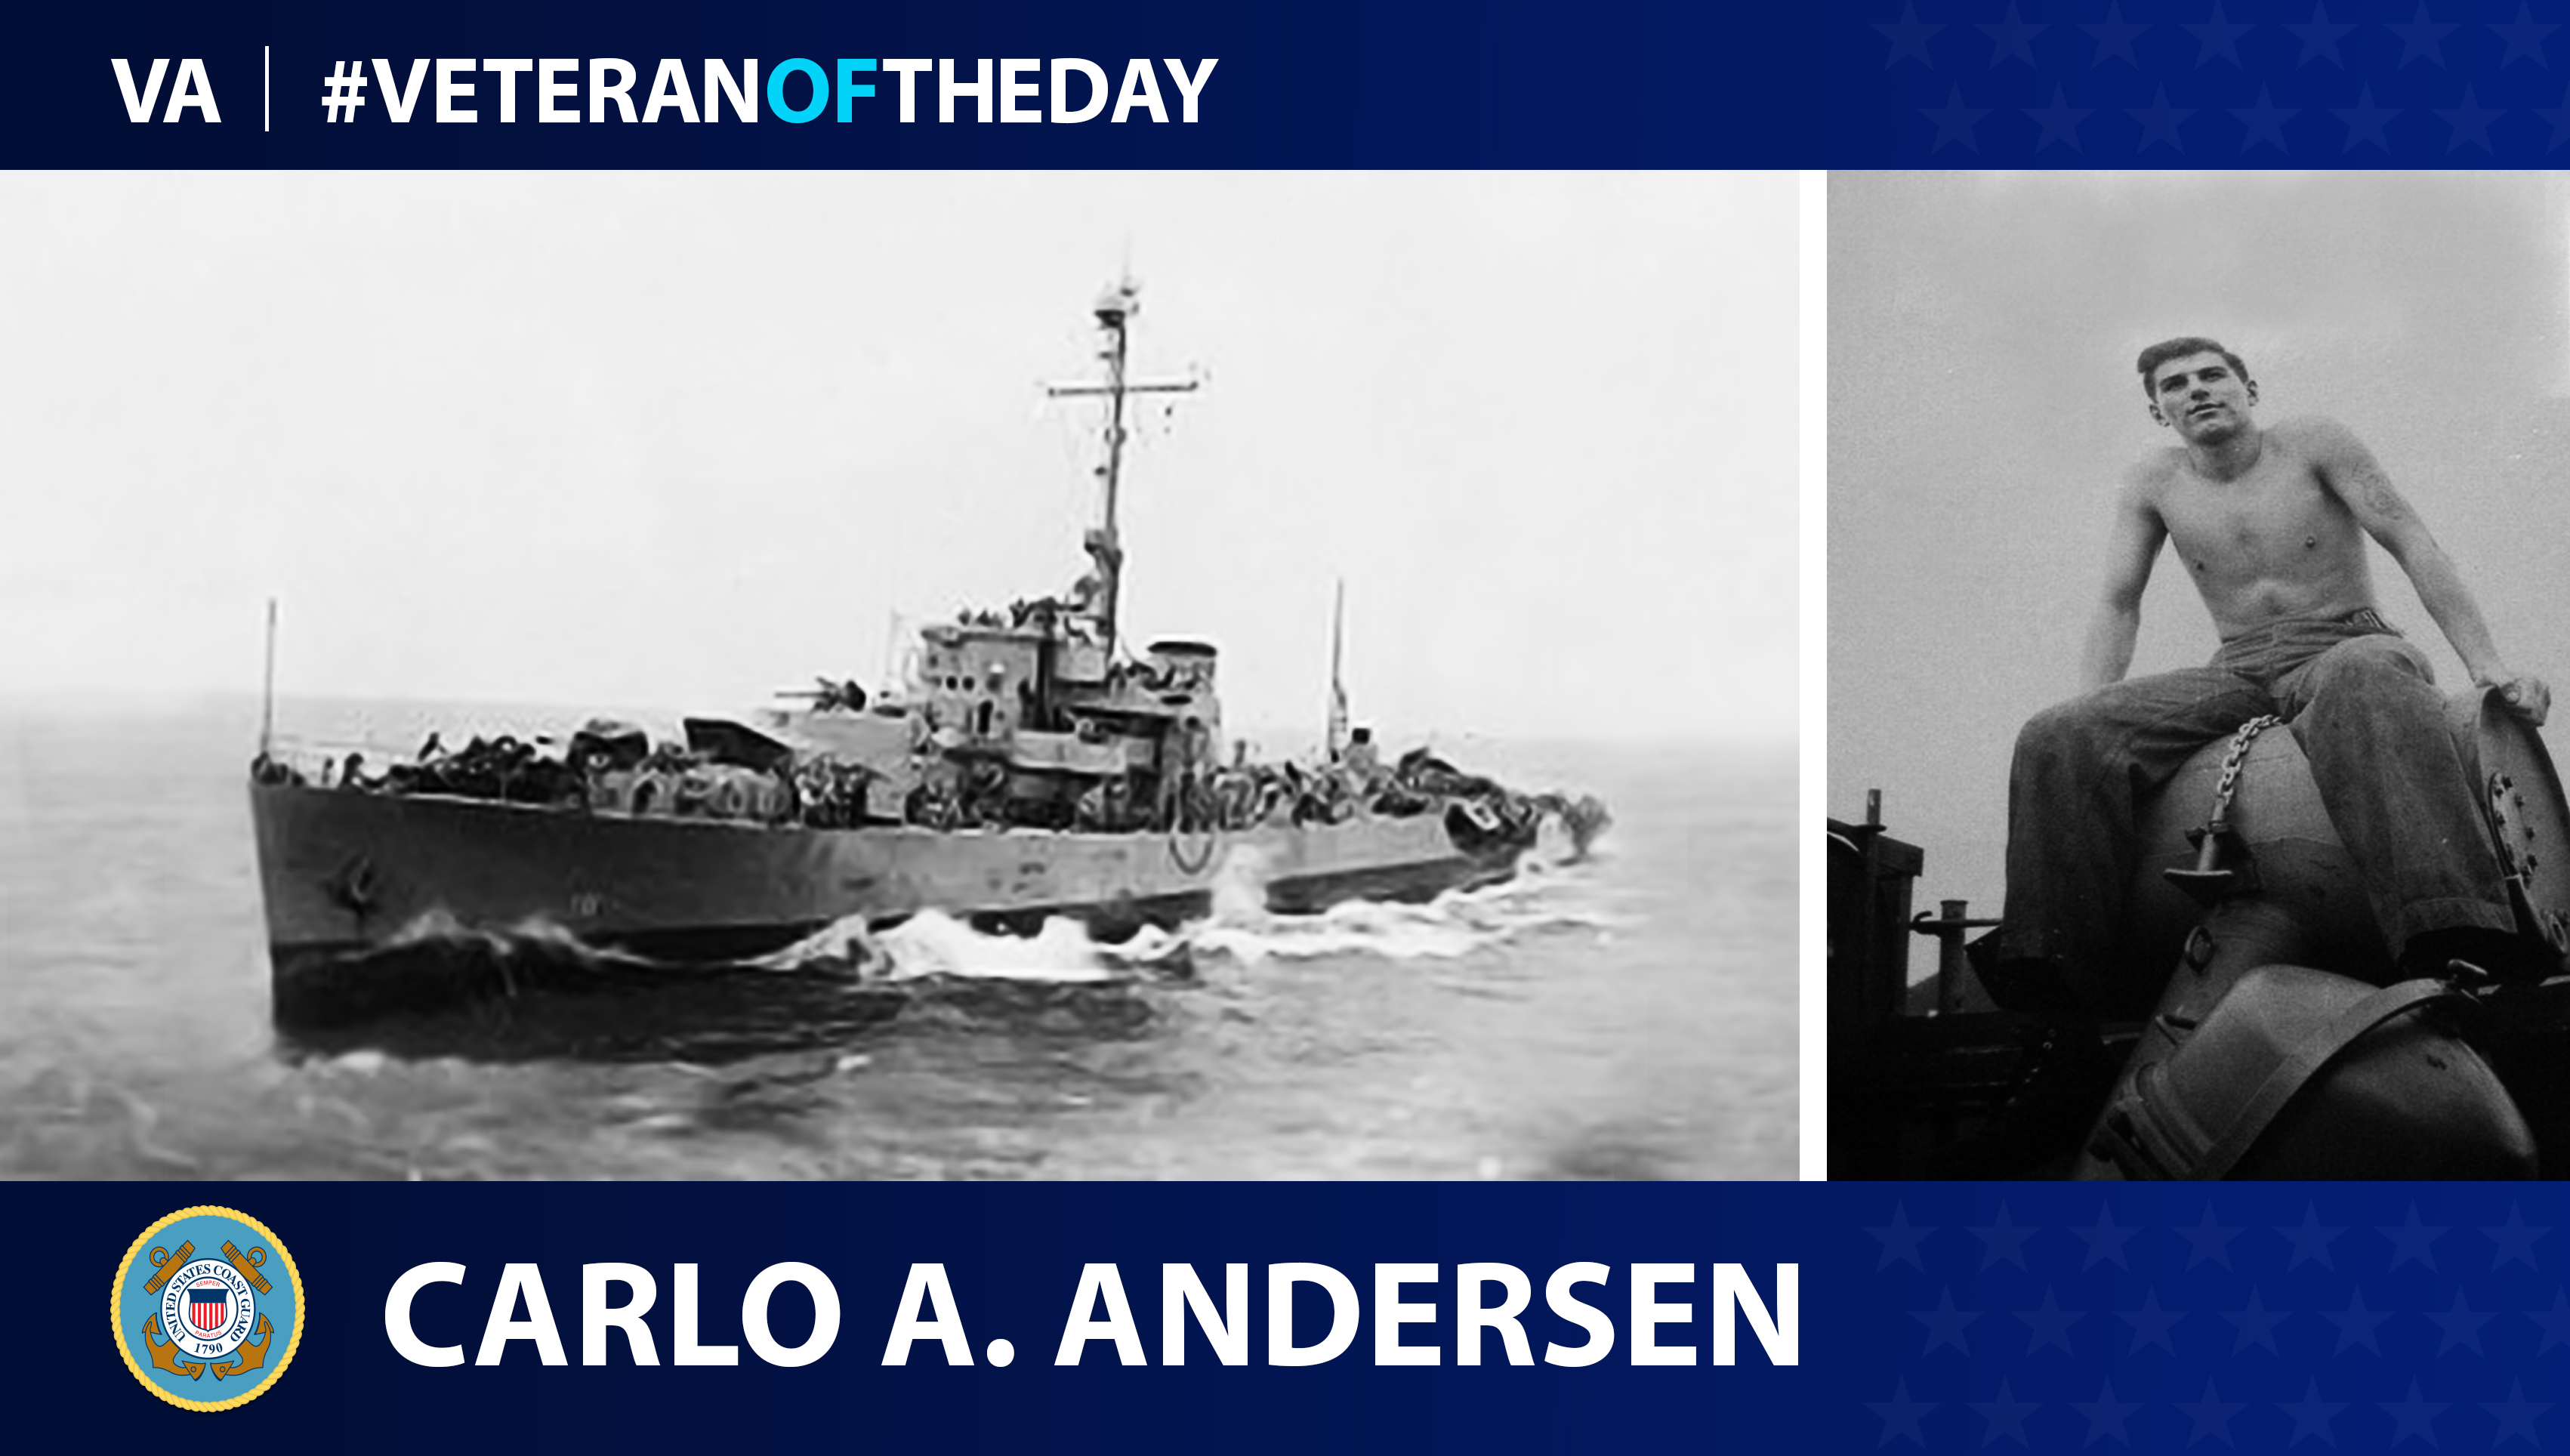 Coast Guard Veteran Carlo Andersen is today's Veteran of the Day.